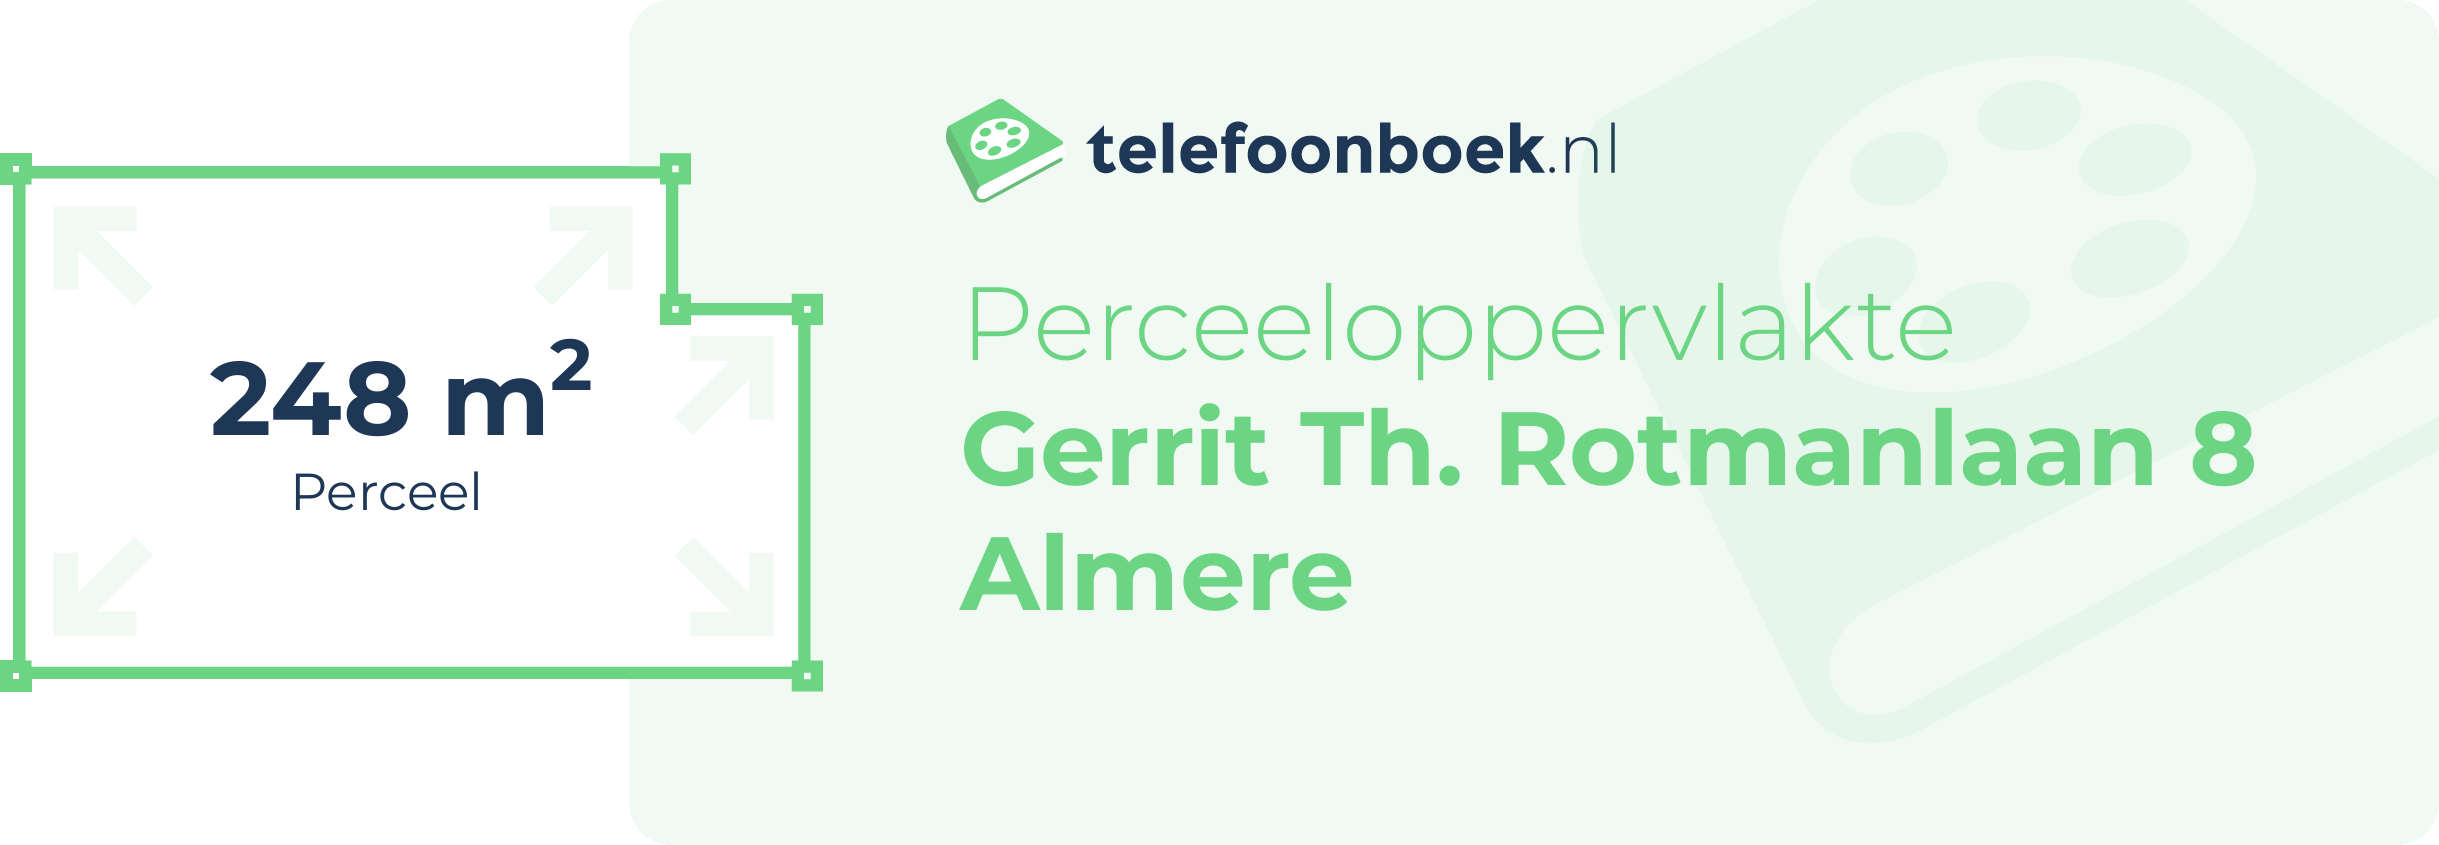 Perceeloppervlakte Gerrit Th. Rotmanlaan 8 Almere